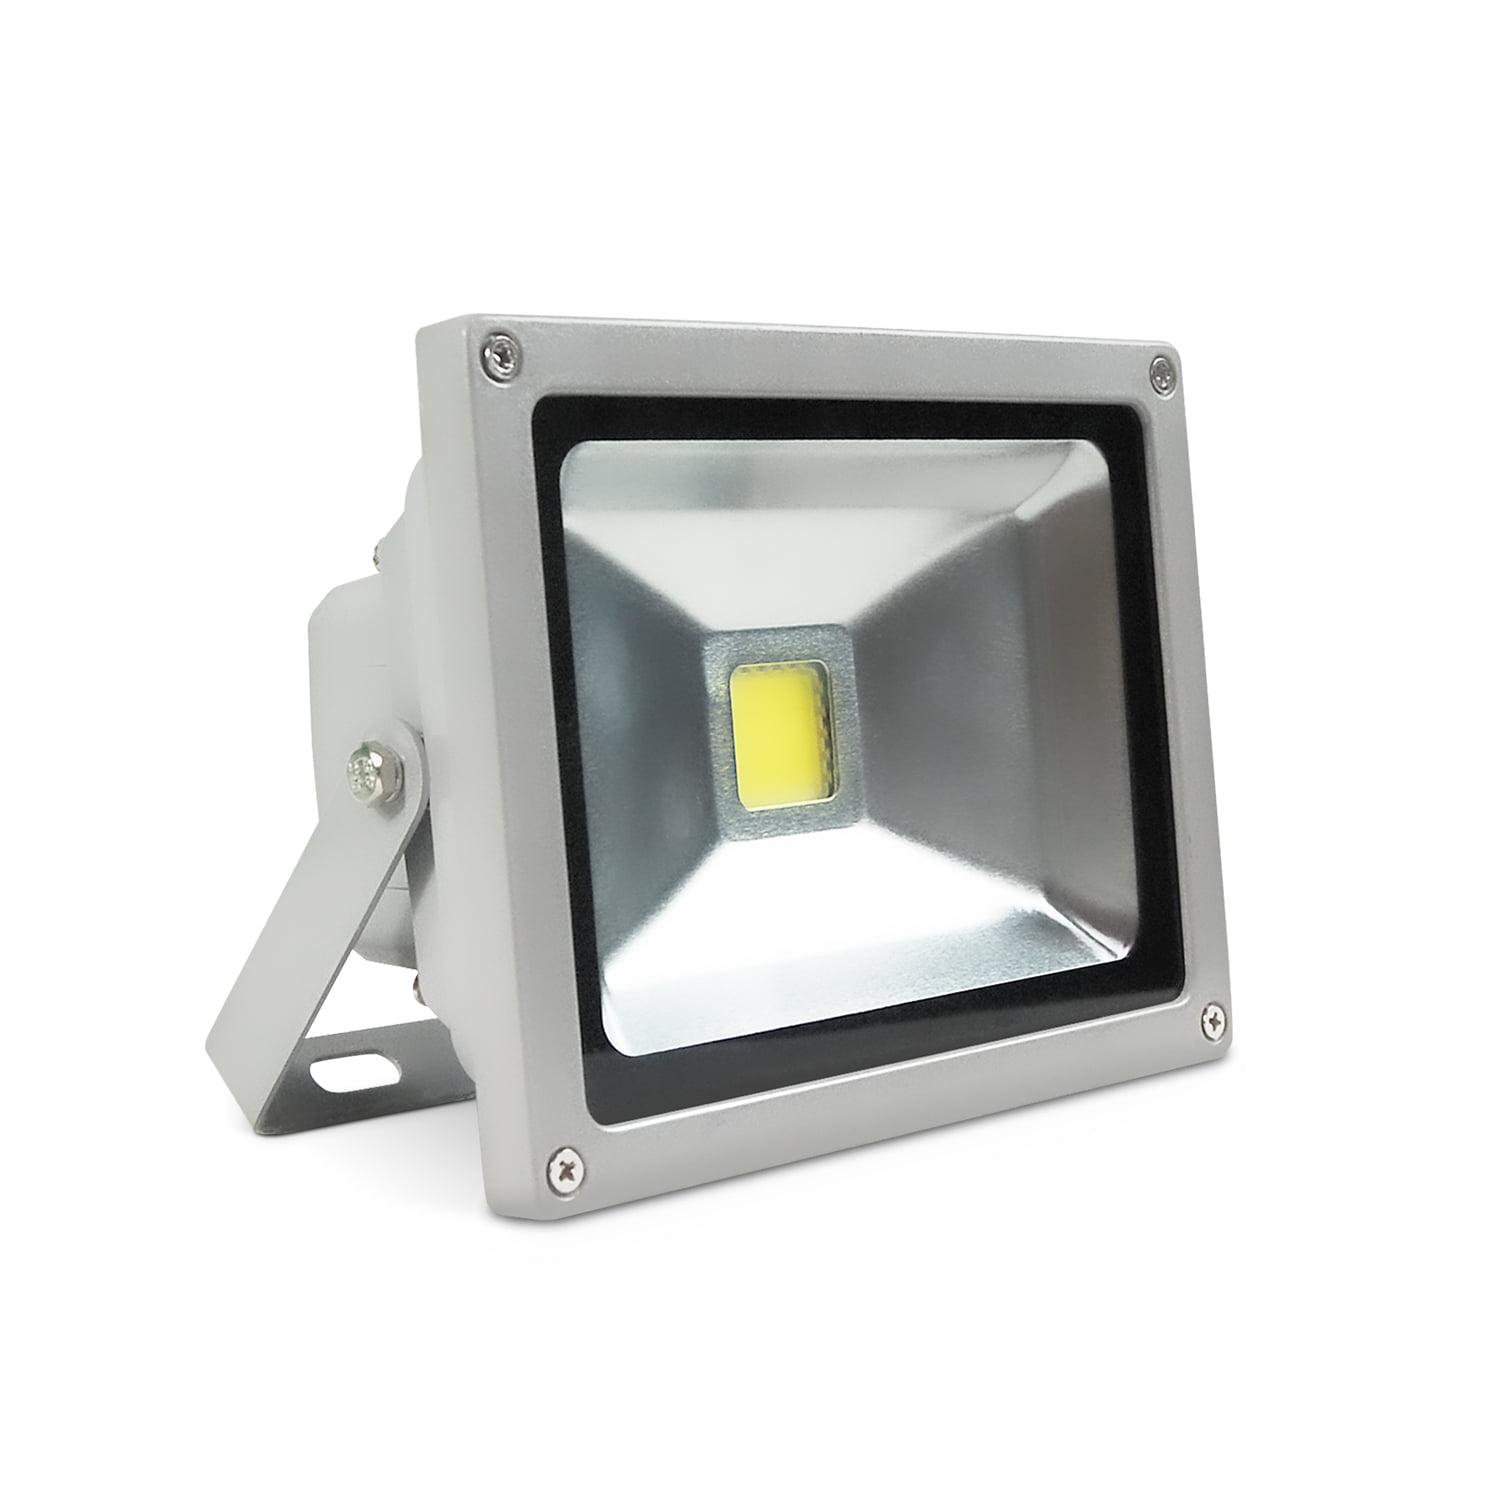 2 x 5w Twin Spot 10w LED Adjustable Beam Floodlight Weatherproof c/w PIR